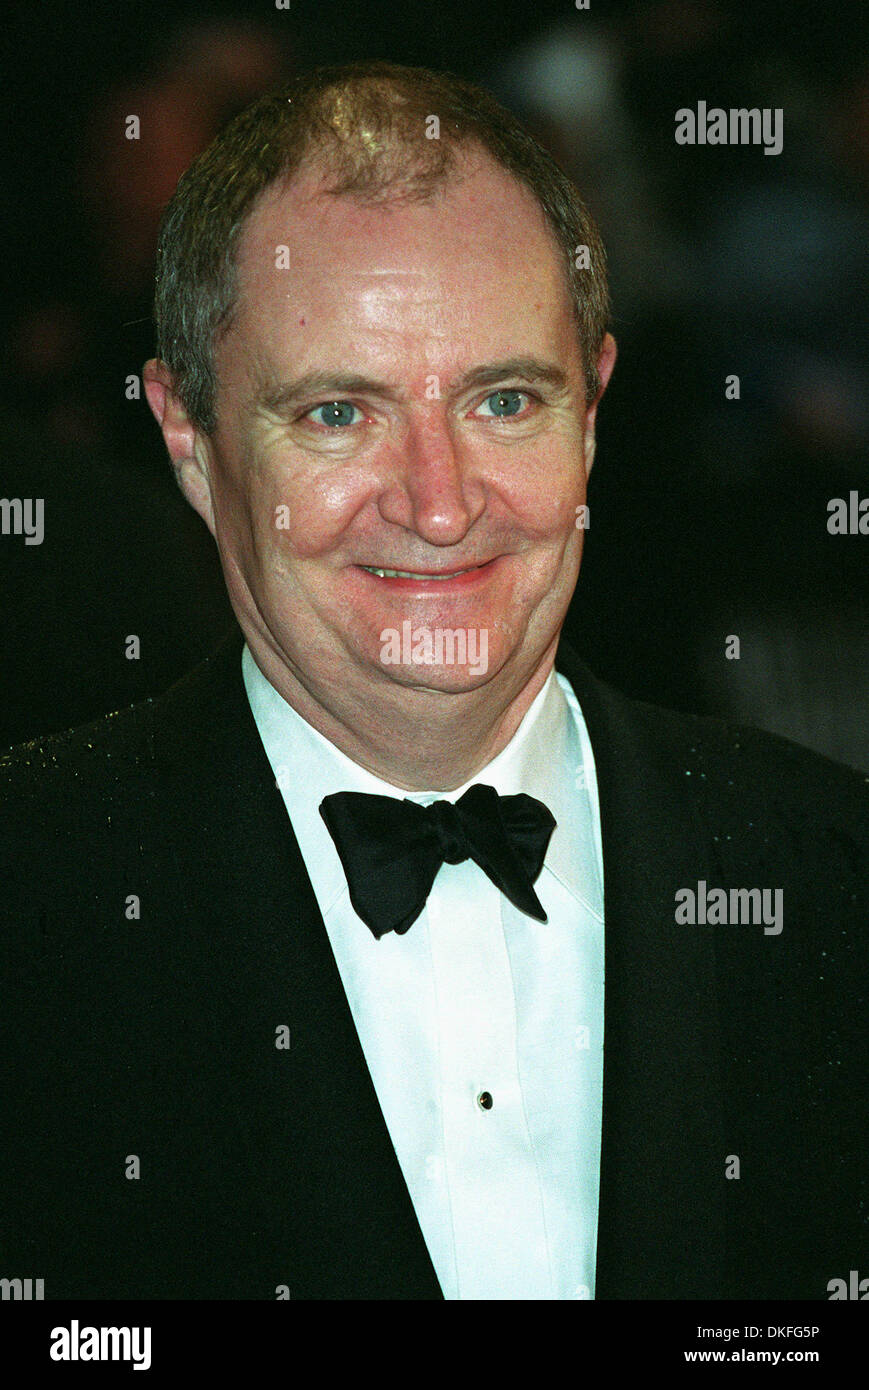 JIM BROADBENT.ACTOR.LAND.Bafta Film Awards, Londres, ENG.24/02/2002.BP95G35C Foto de stock